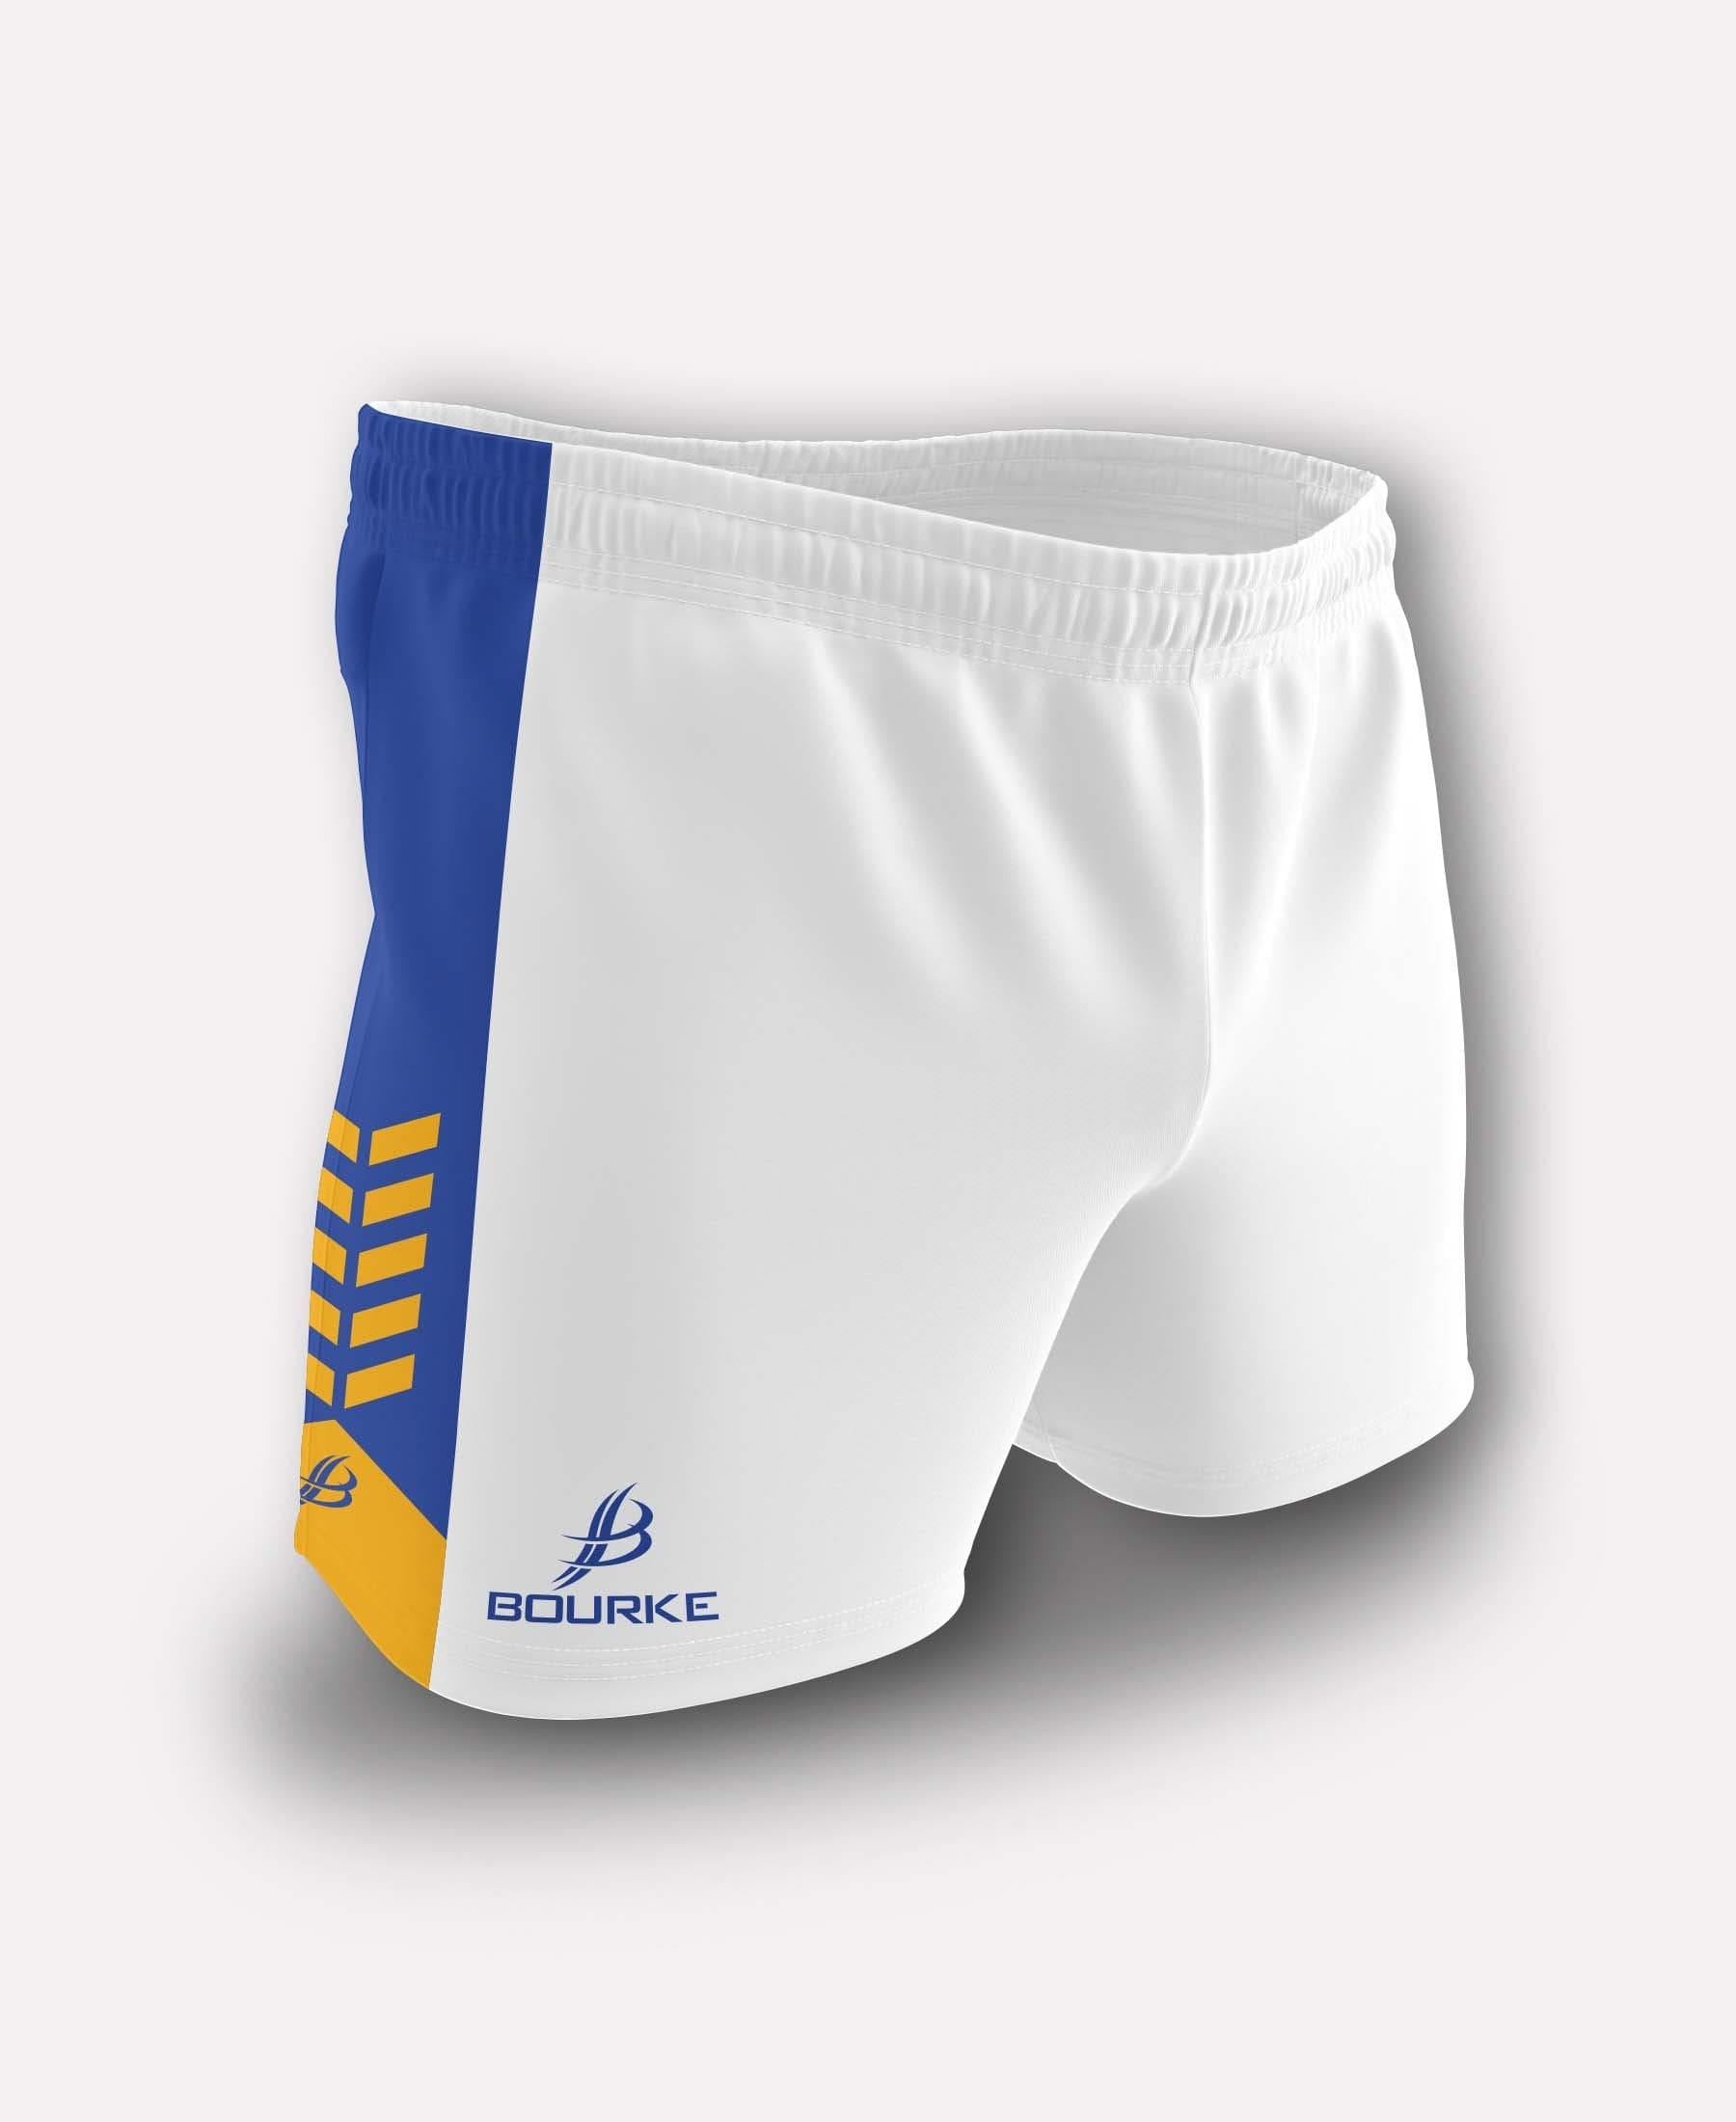 Chevron Kids Shorts (White/Royal/Amber) - Bourke Sports Limited